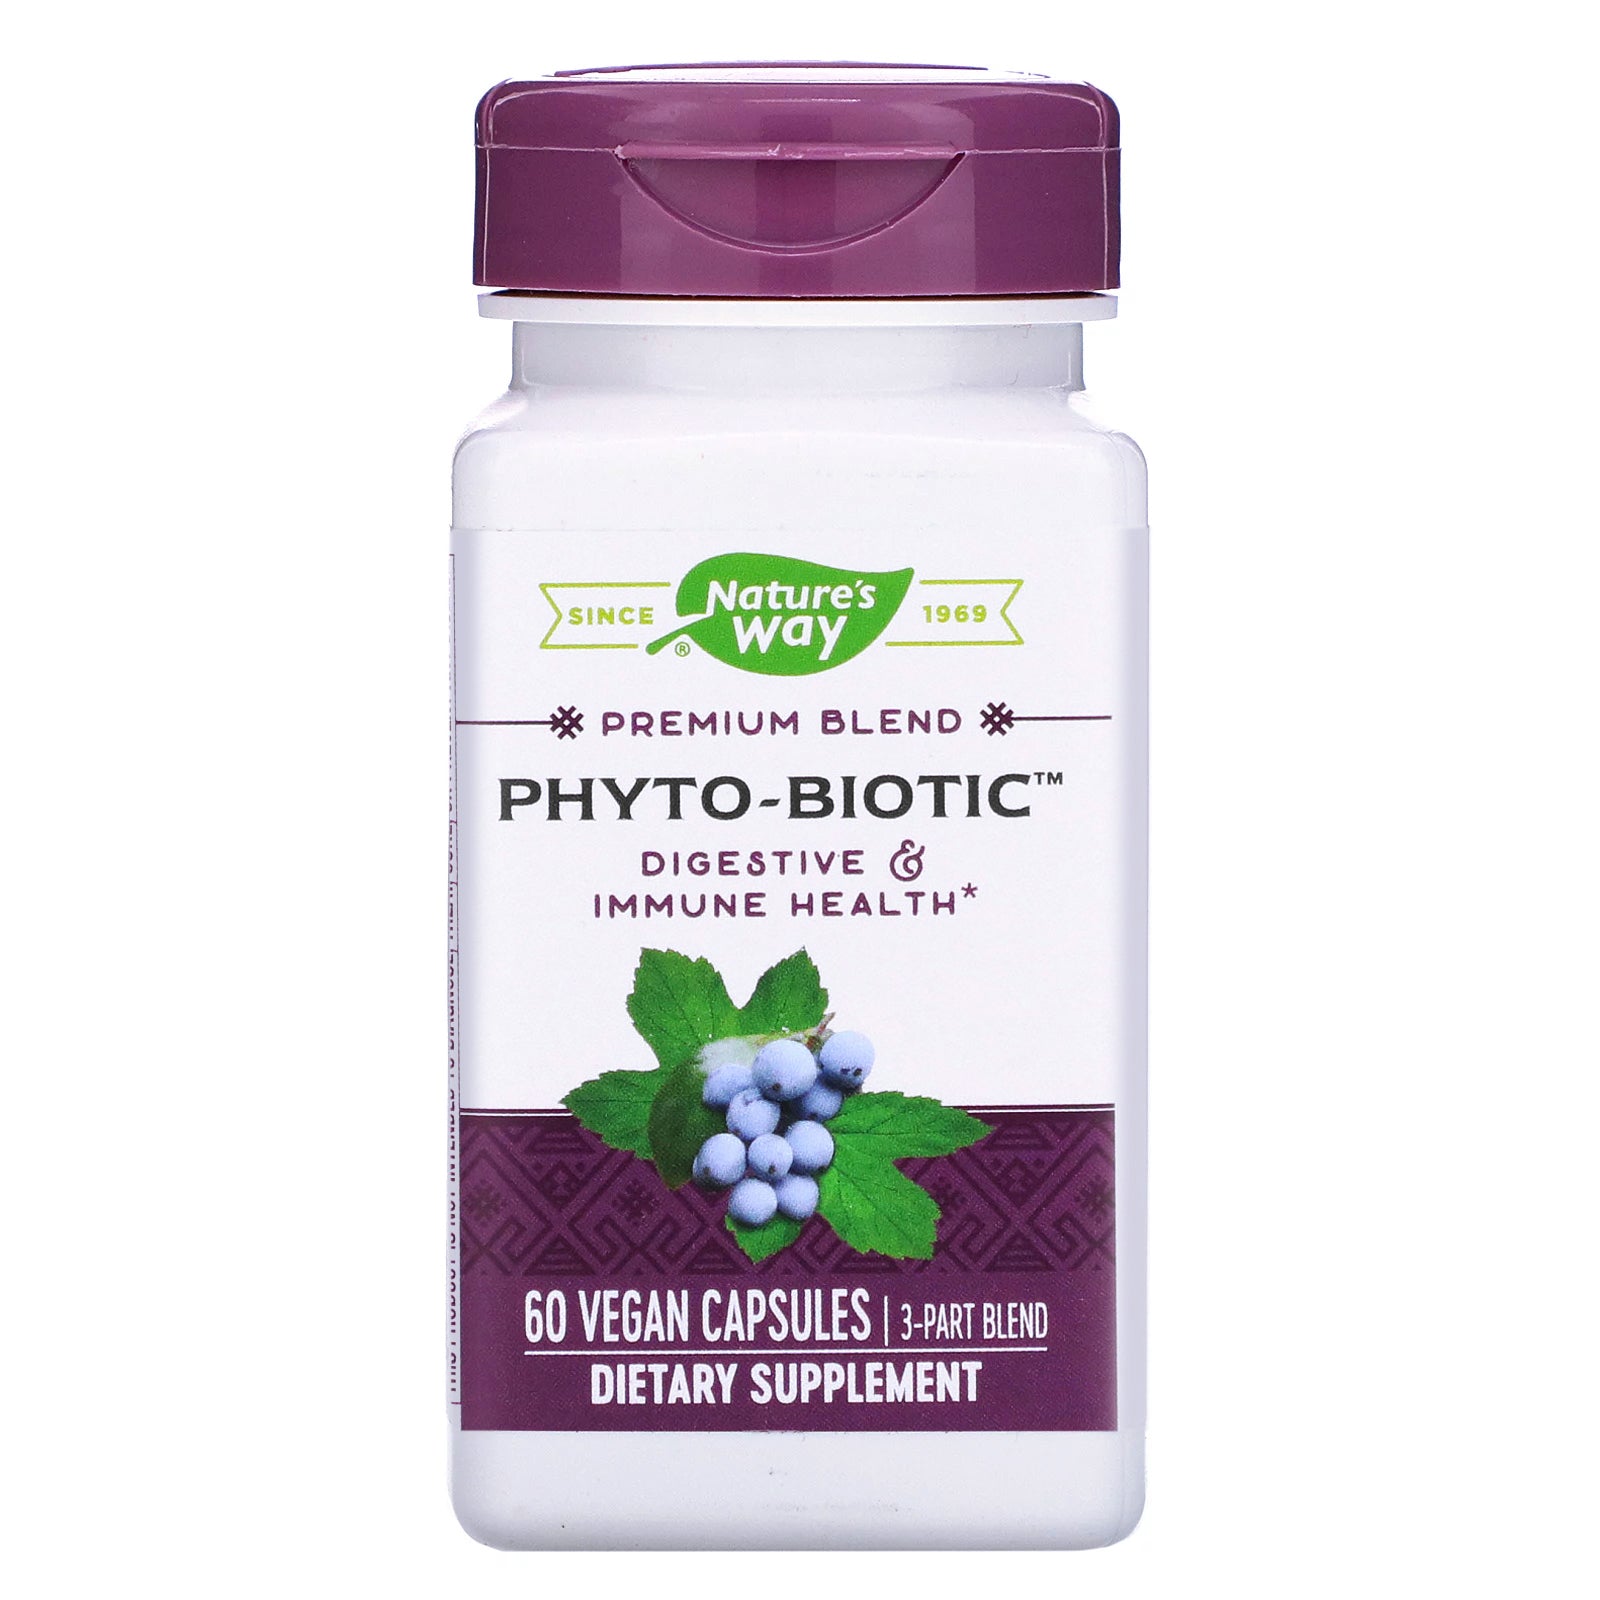 Nature's Way, Phyto-Biotic, Digestive & Immune Health, 3 Part Blend, 60 Vegan Capsules